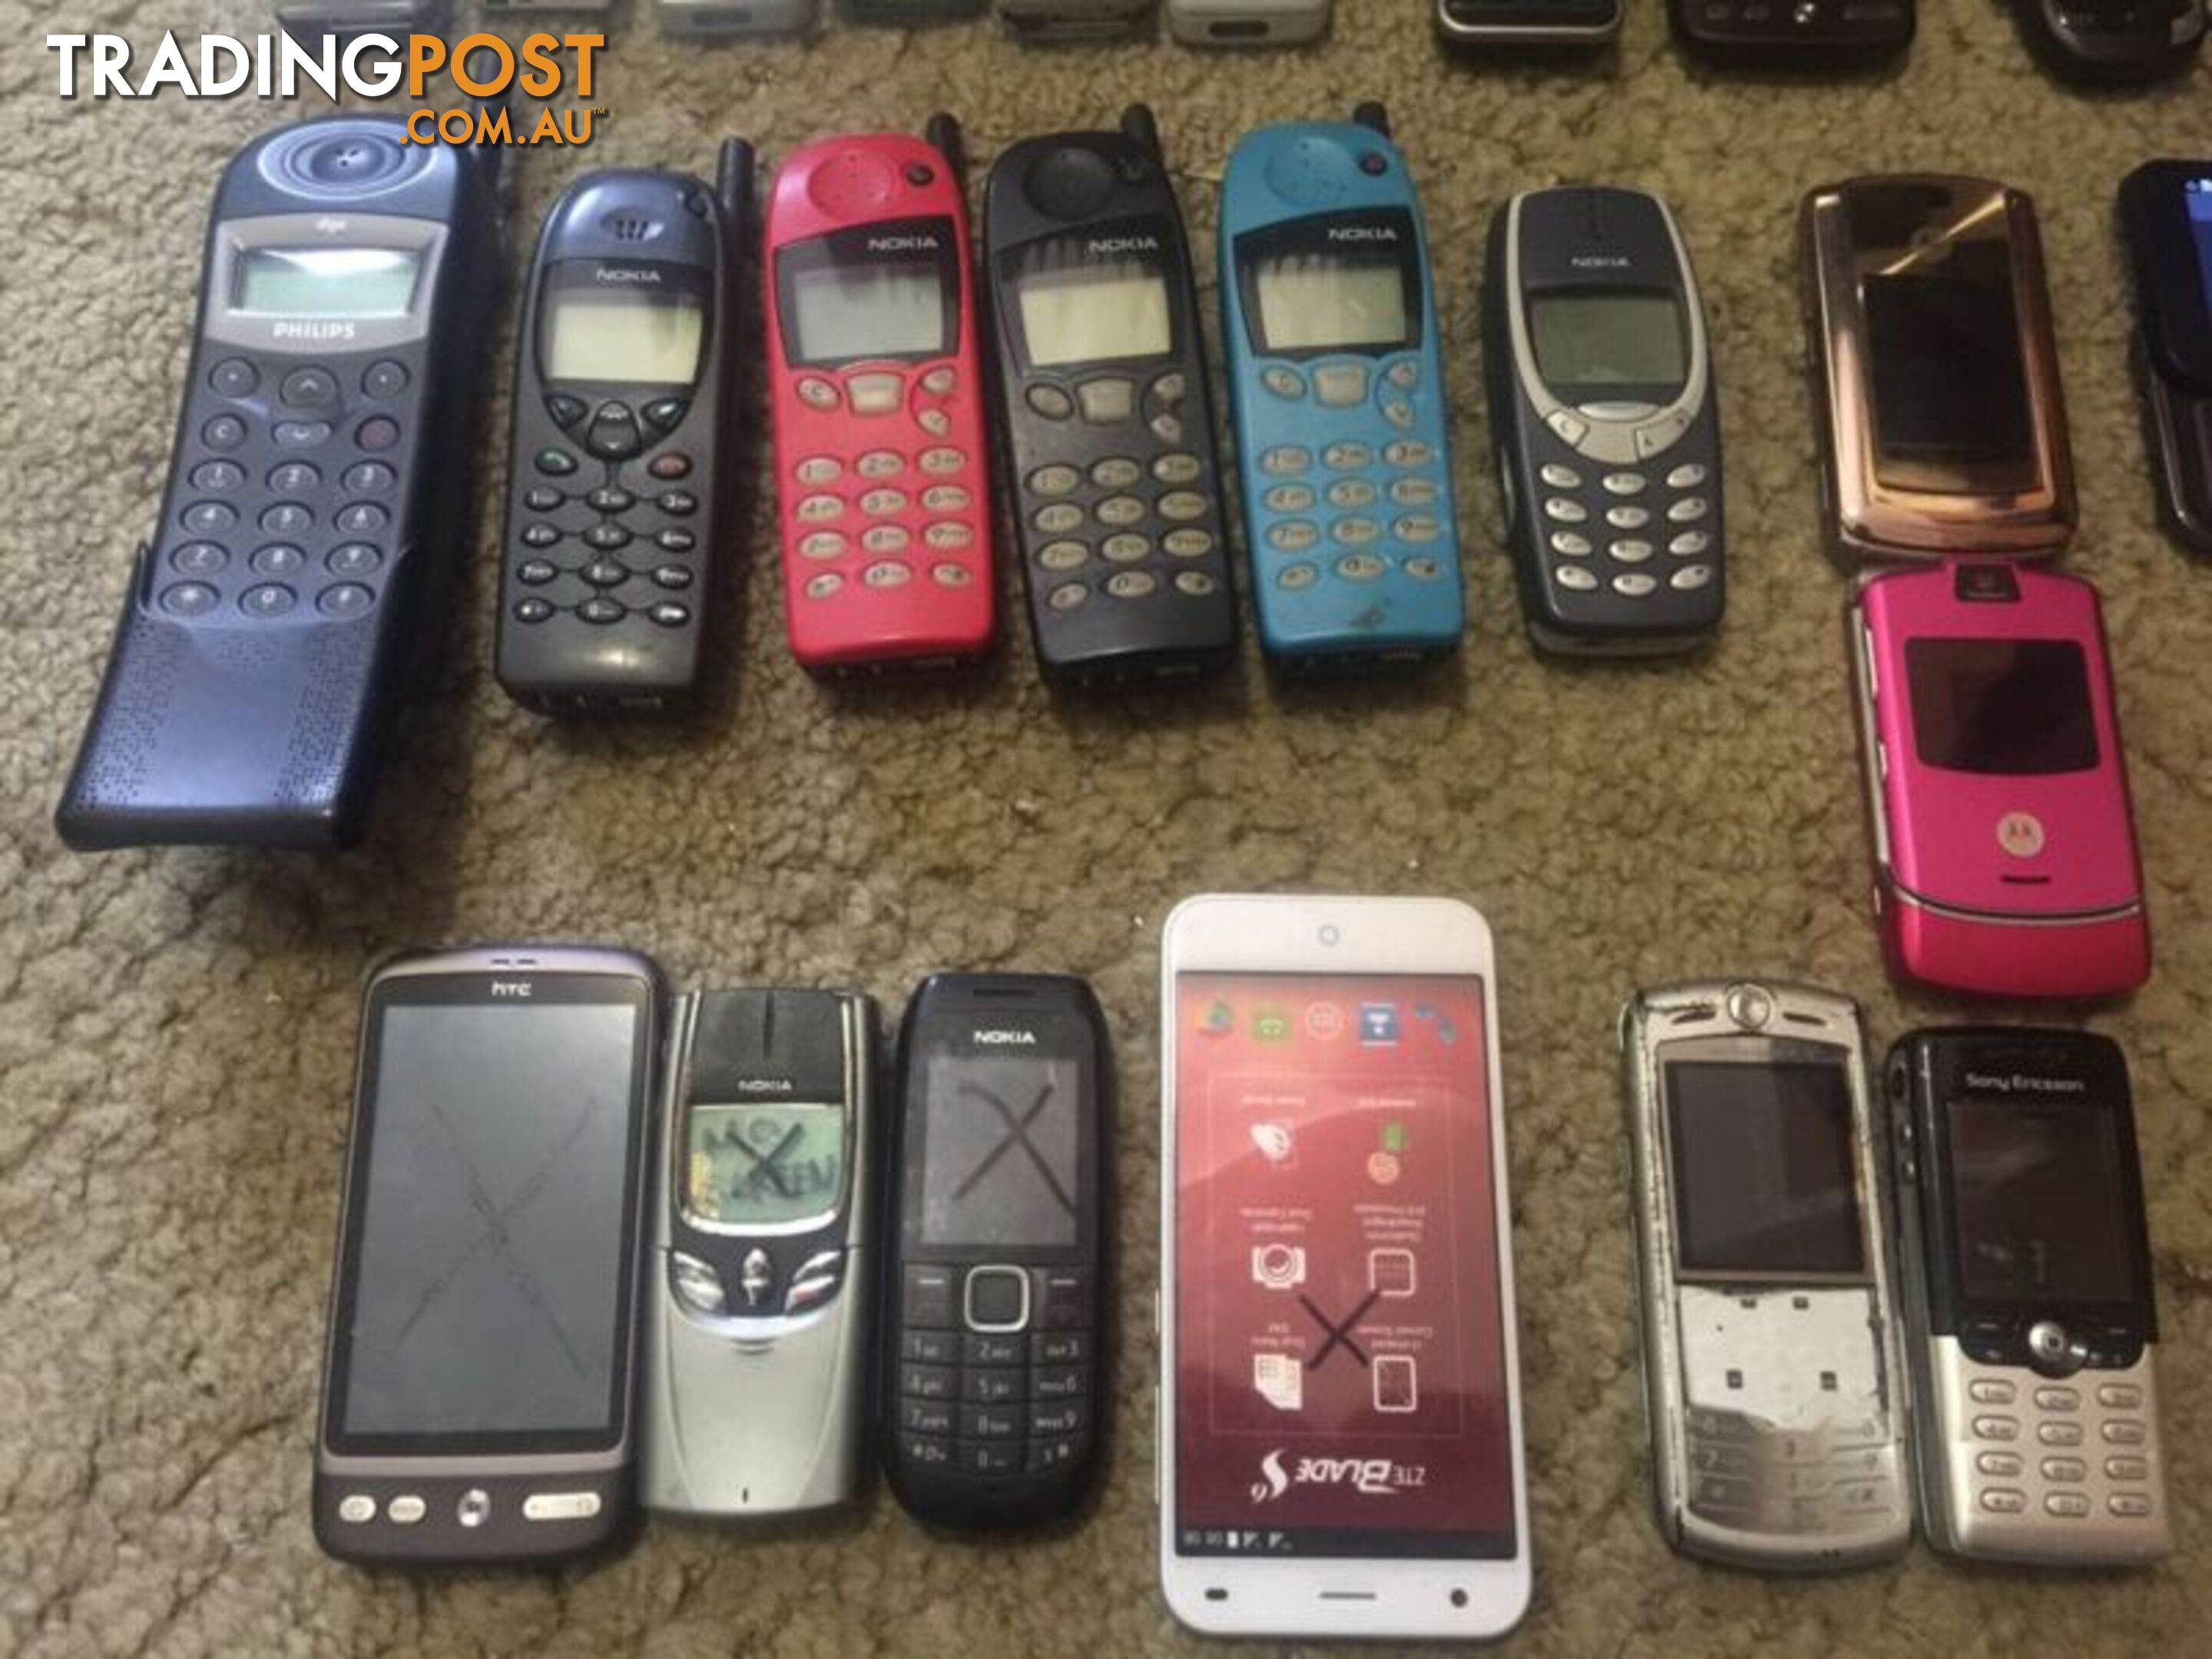 Mobile phone collection / Nokia / motorola